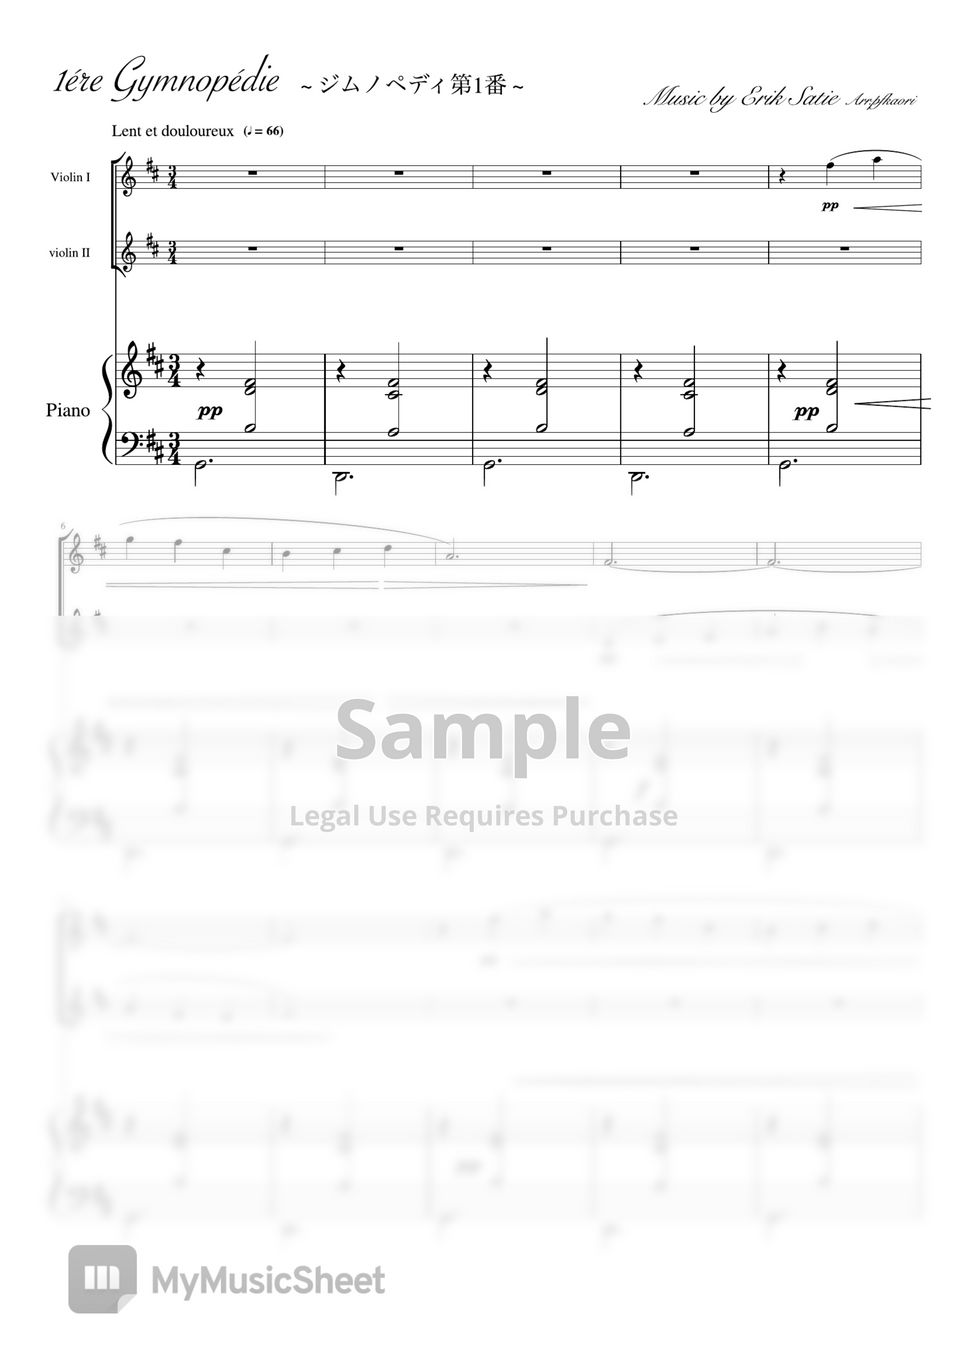 Erik Satie - Gymnopedie No. 1 (Piano trio/violin duet) by pfkaori